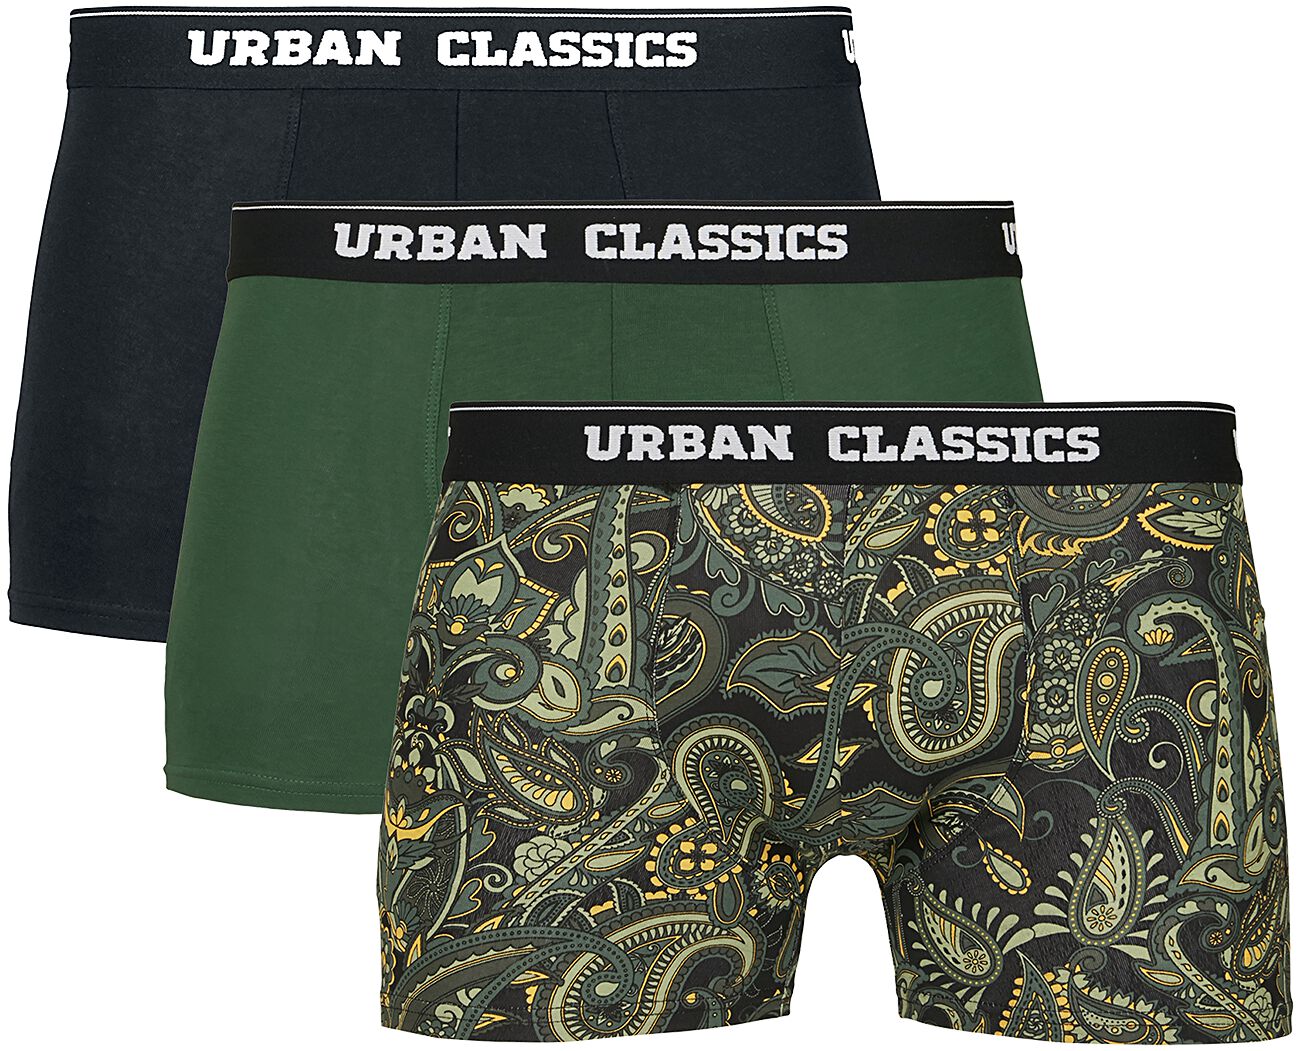 Urban Classics Boxer Shorts 3-Pack Boxers Set black green